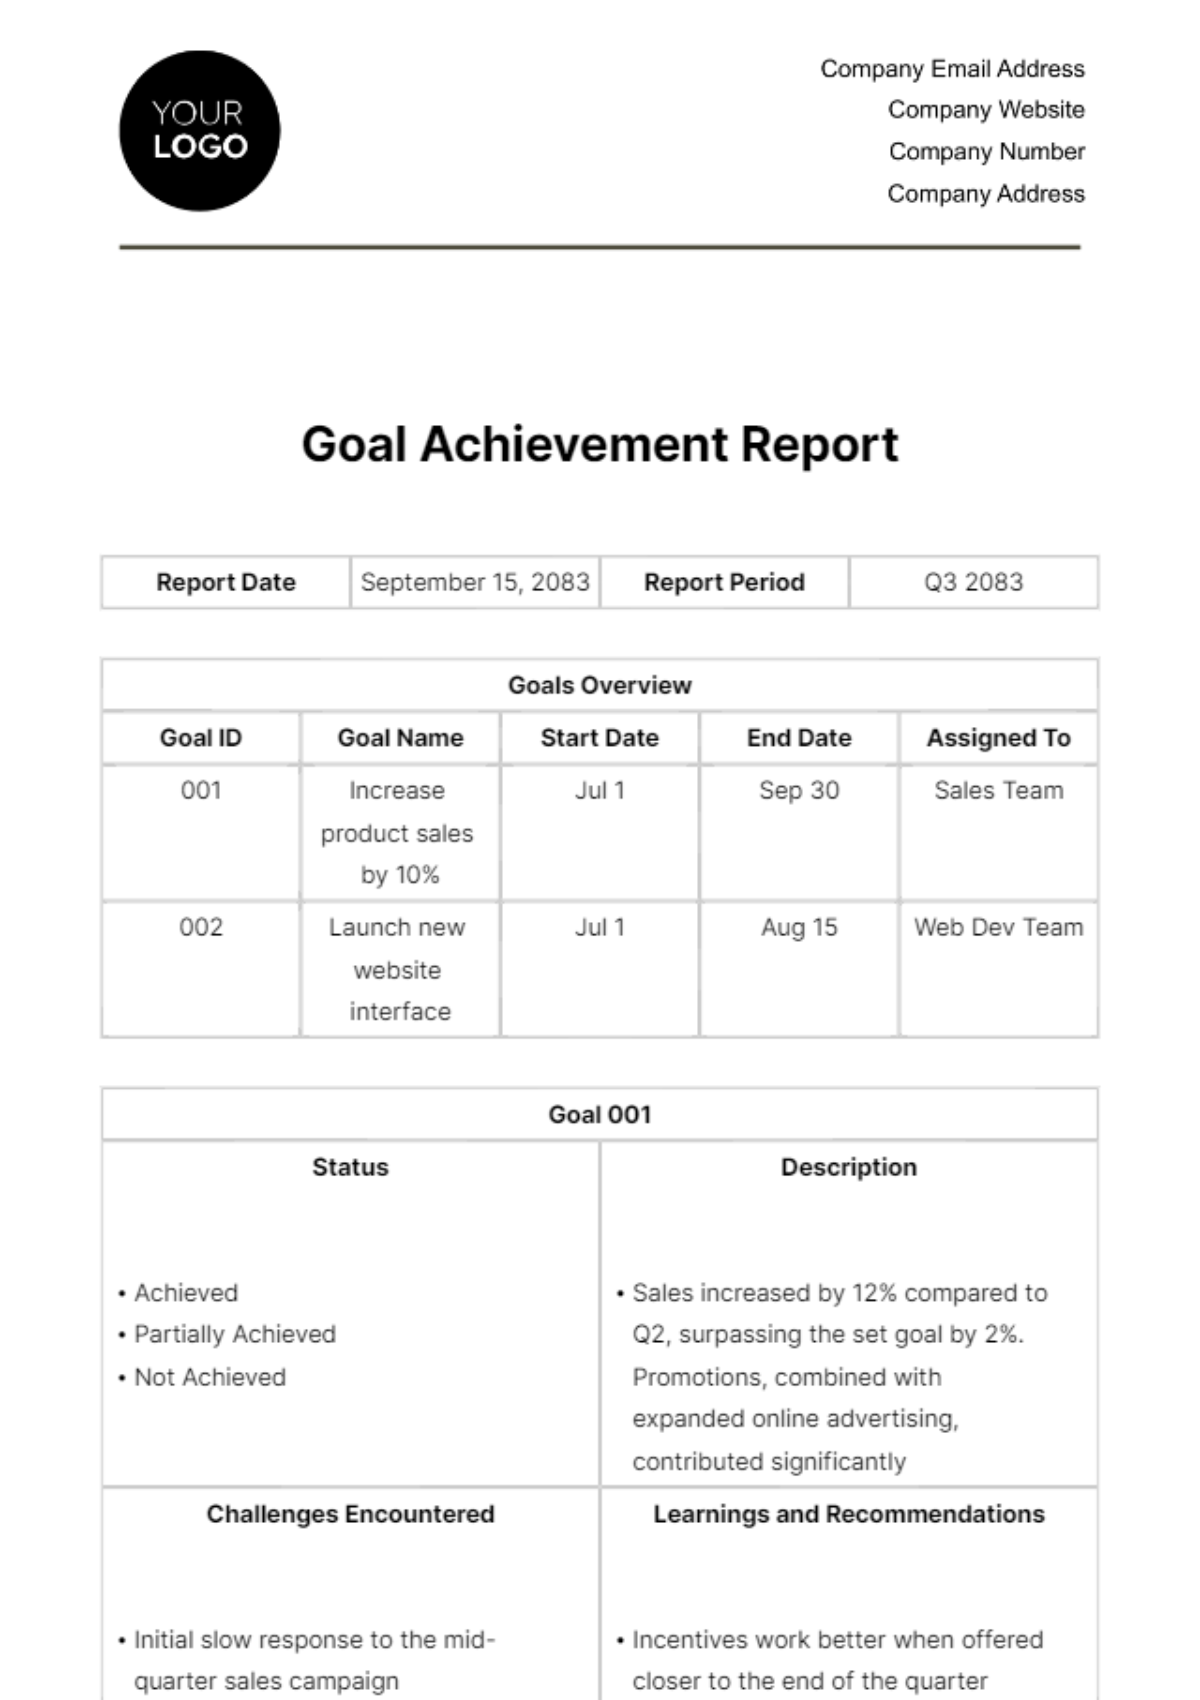 Goal Achievement Report HR Template